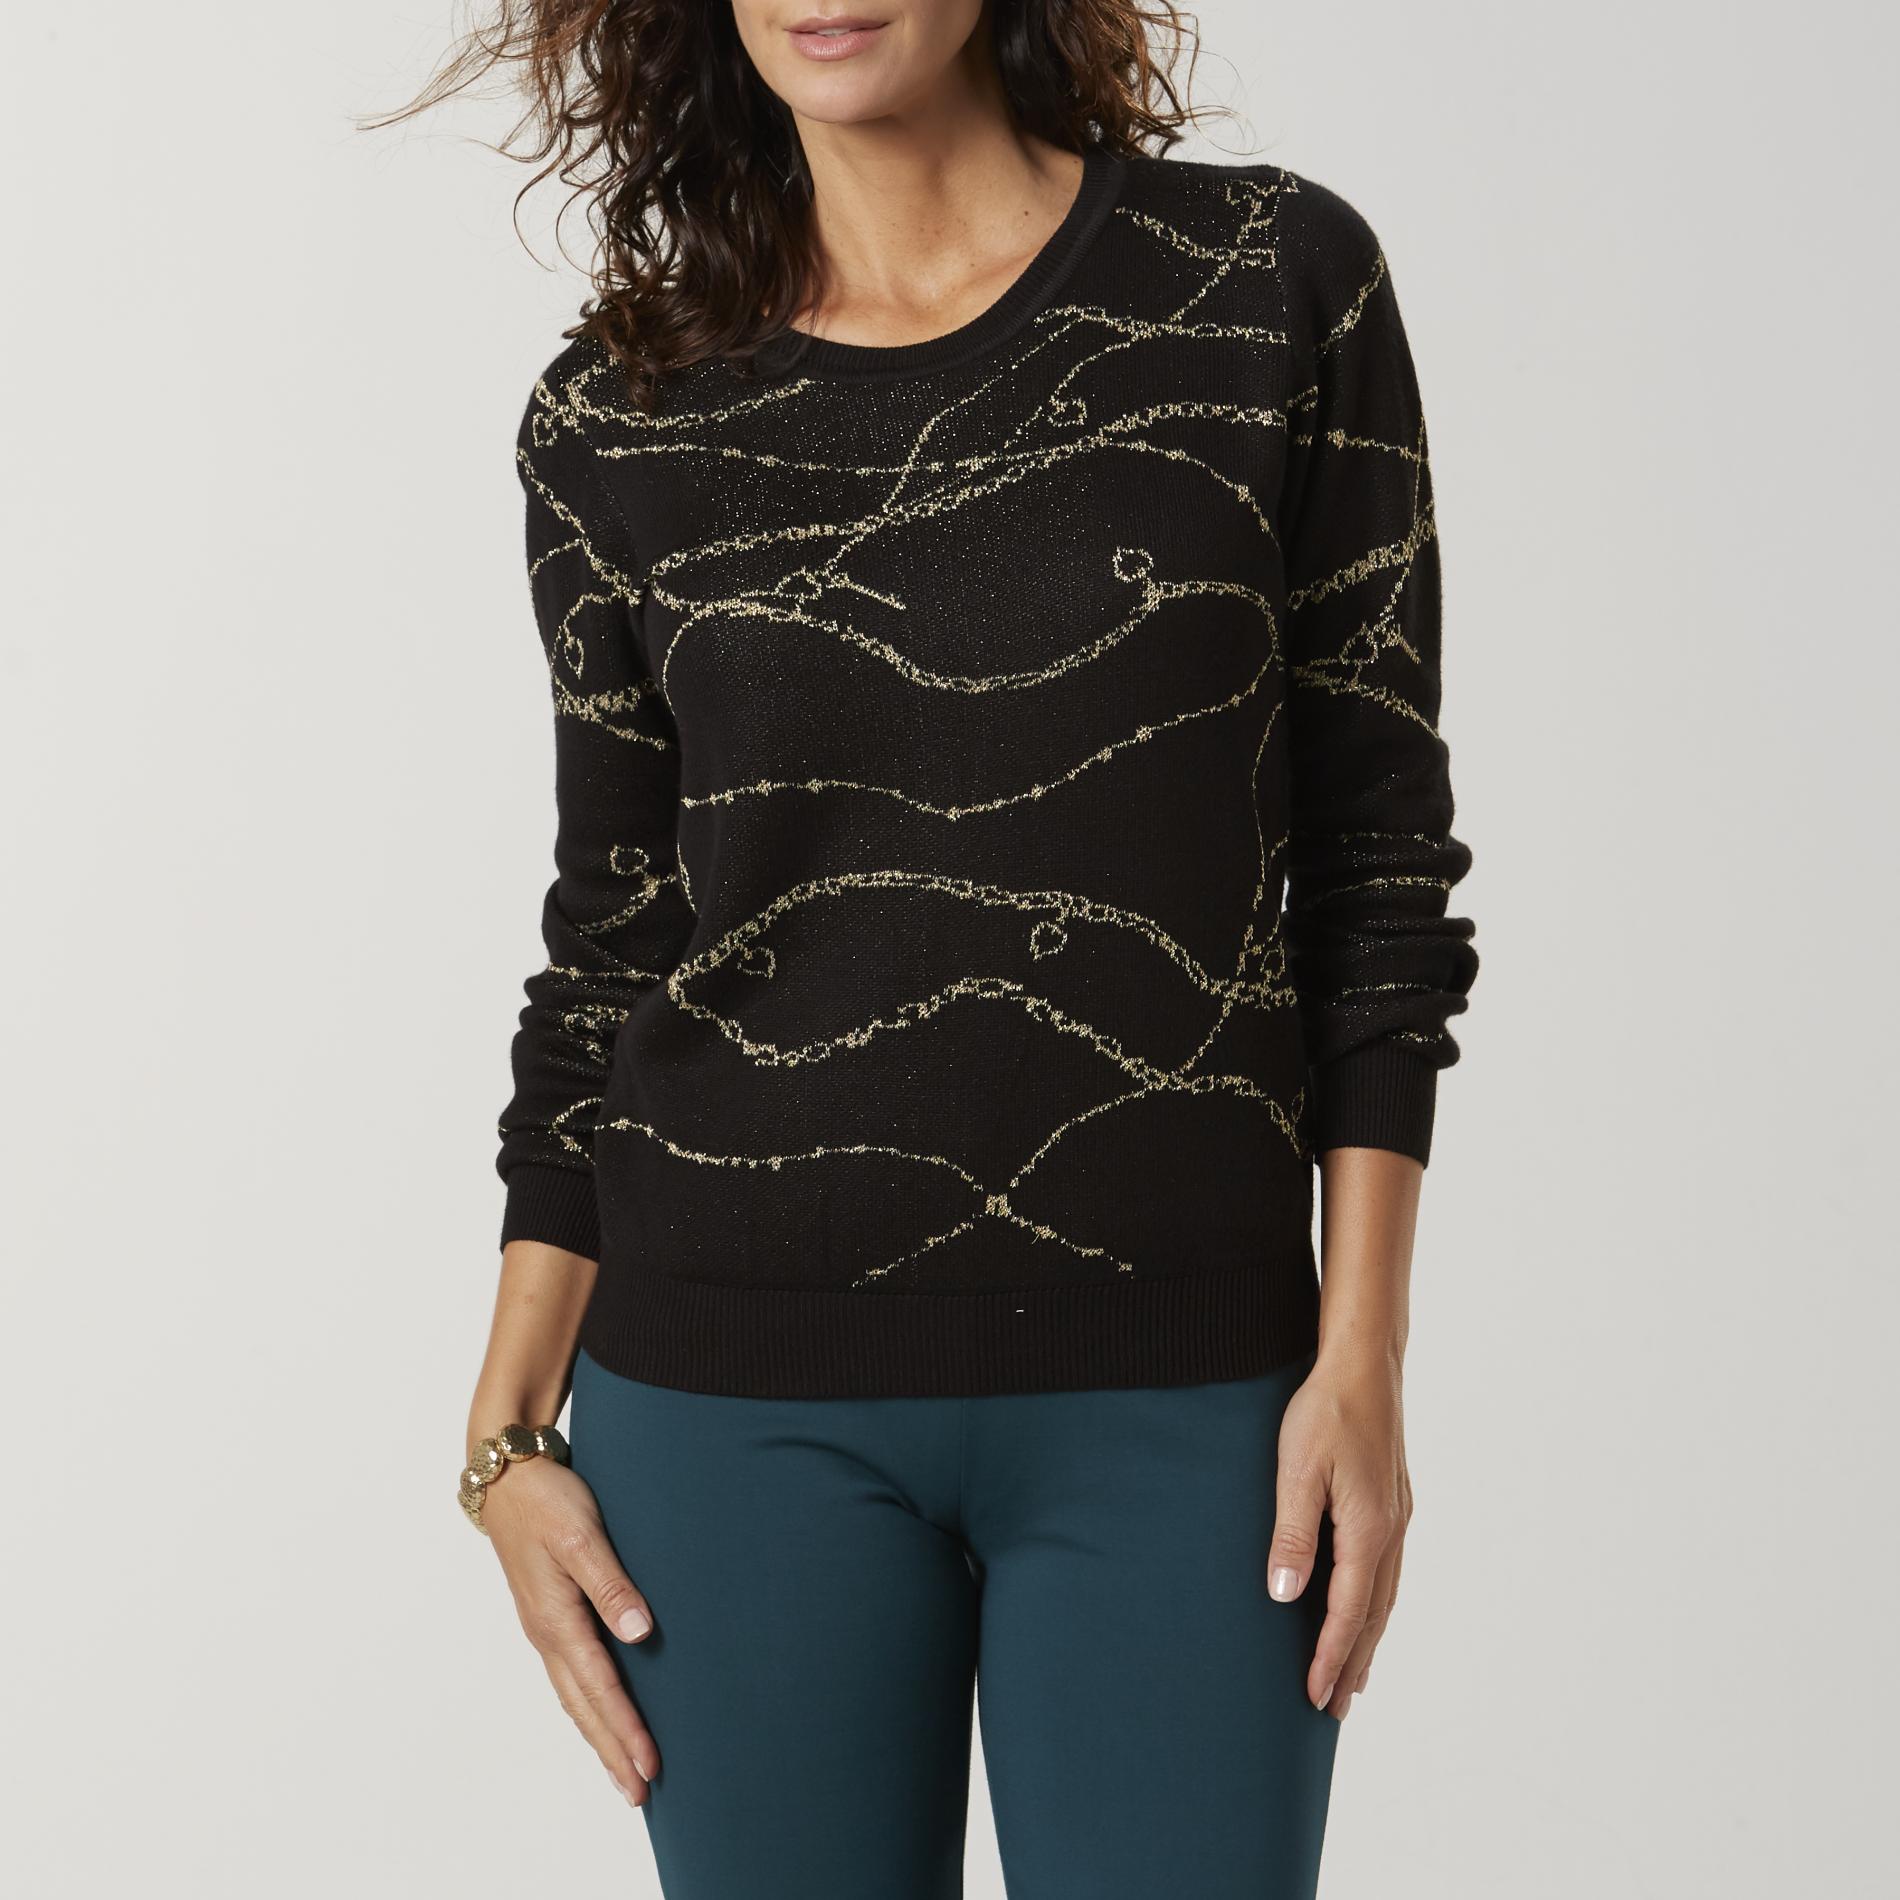 Jaclyn Smith Women's Embellished Sweater - Chain